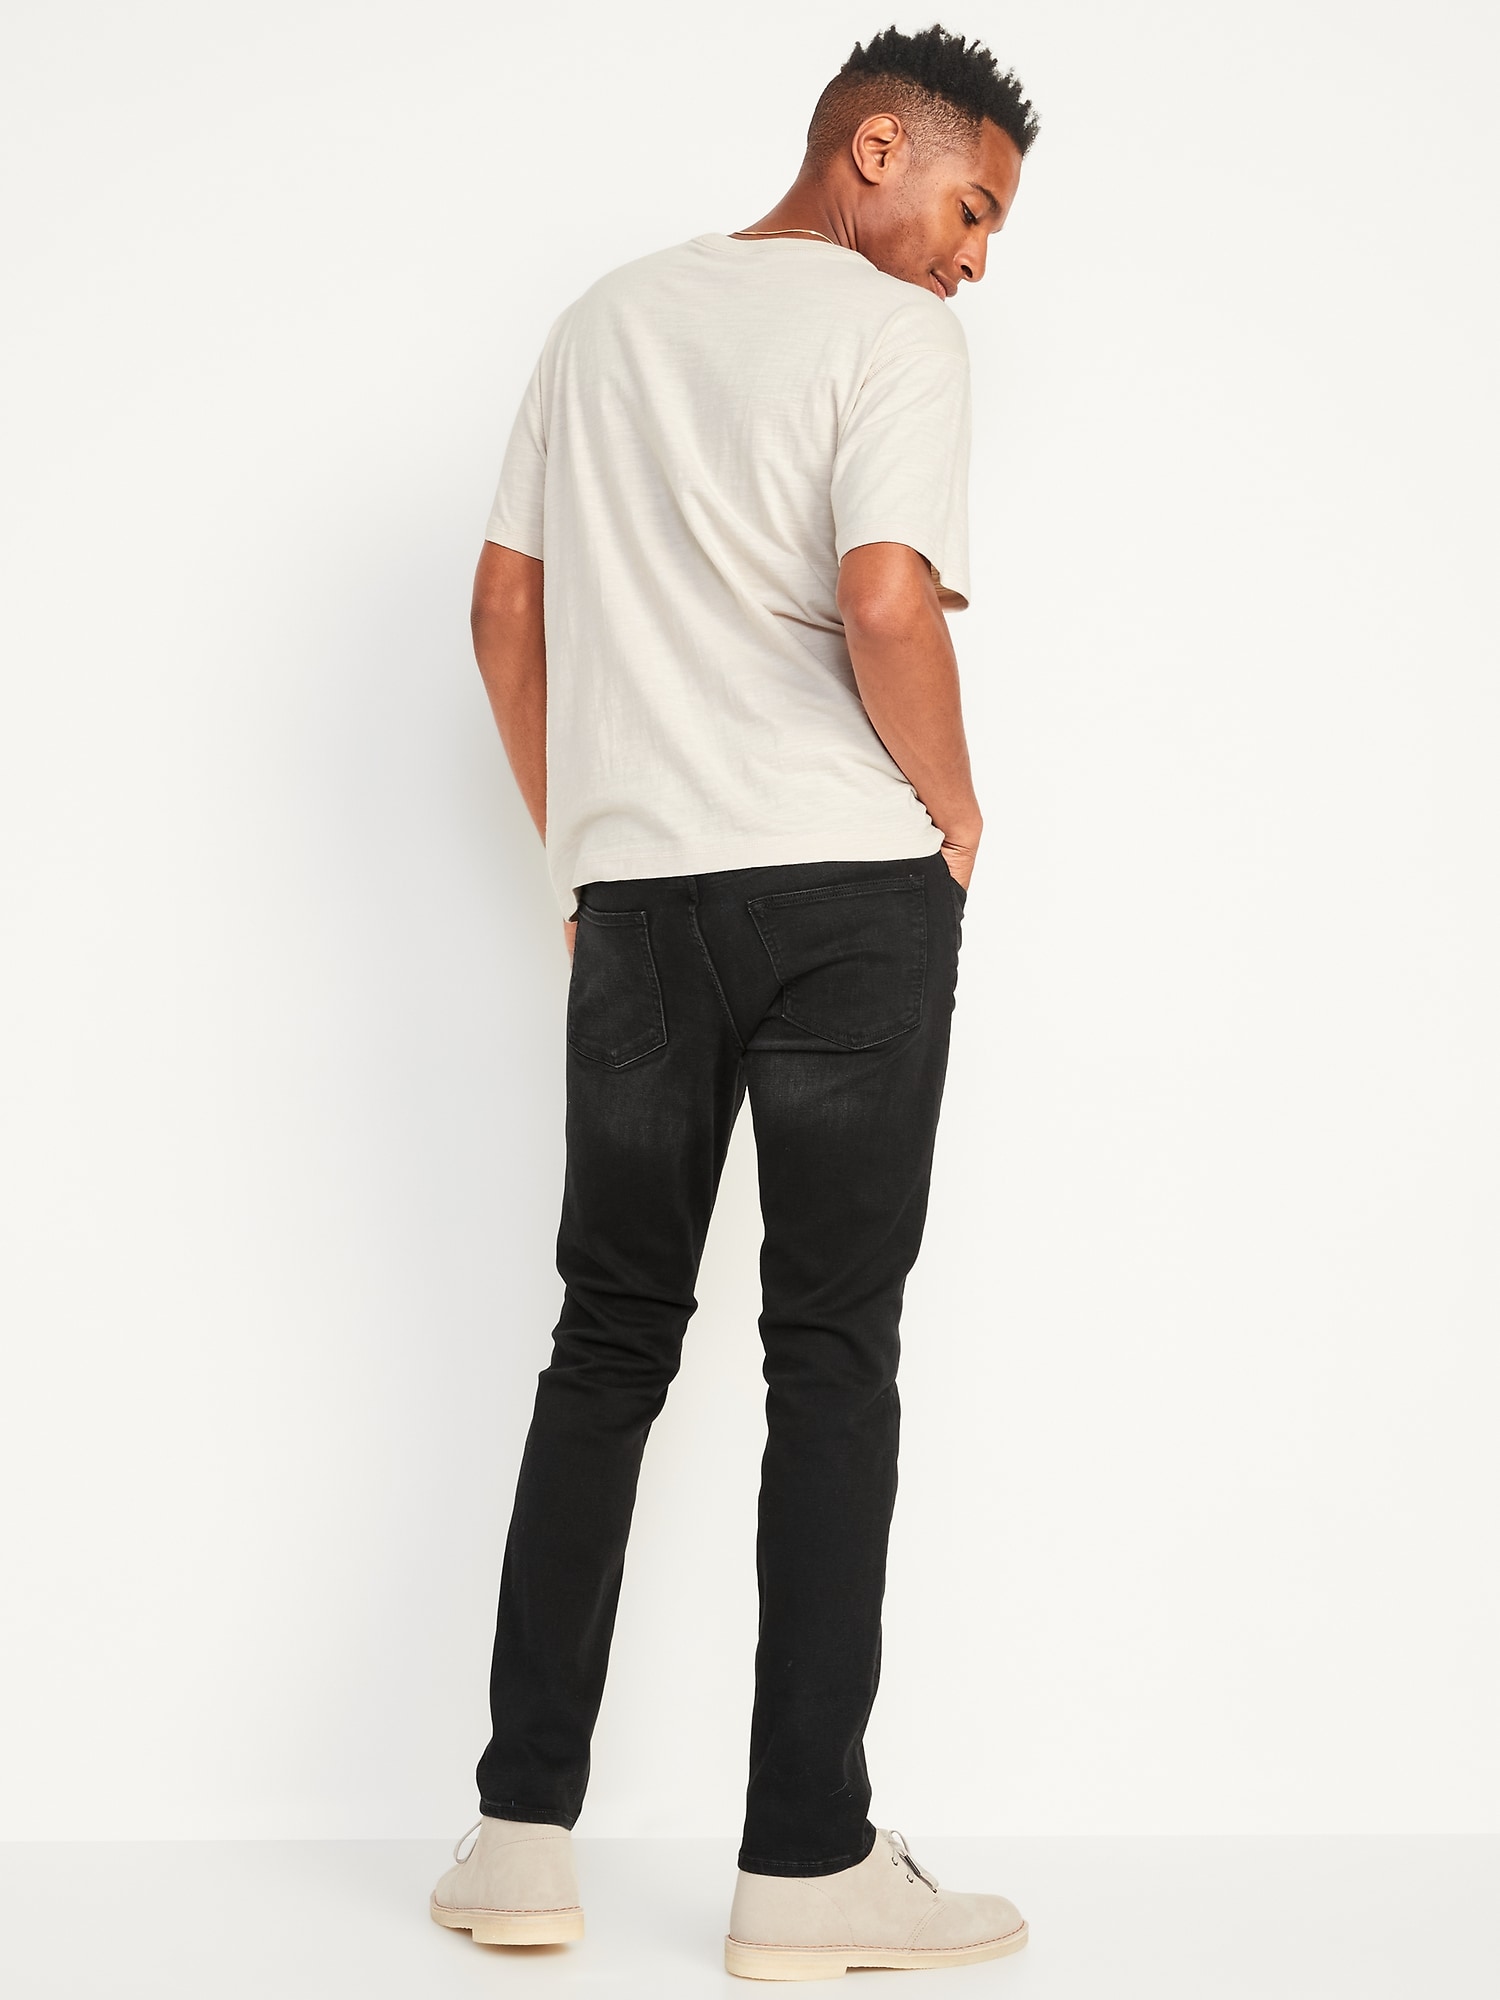 Black Jeans Men's Elasticity Slim Fit Skinny Pants Men Spring Trousers